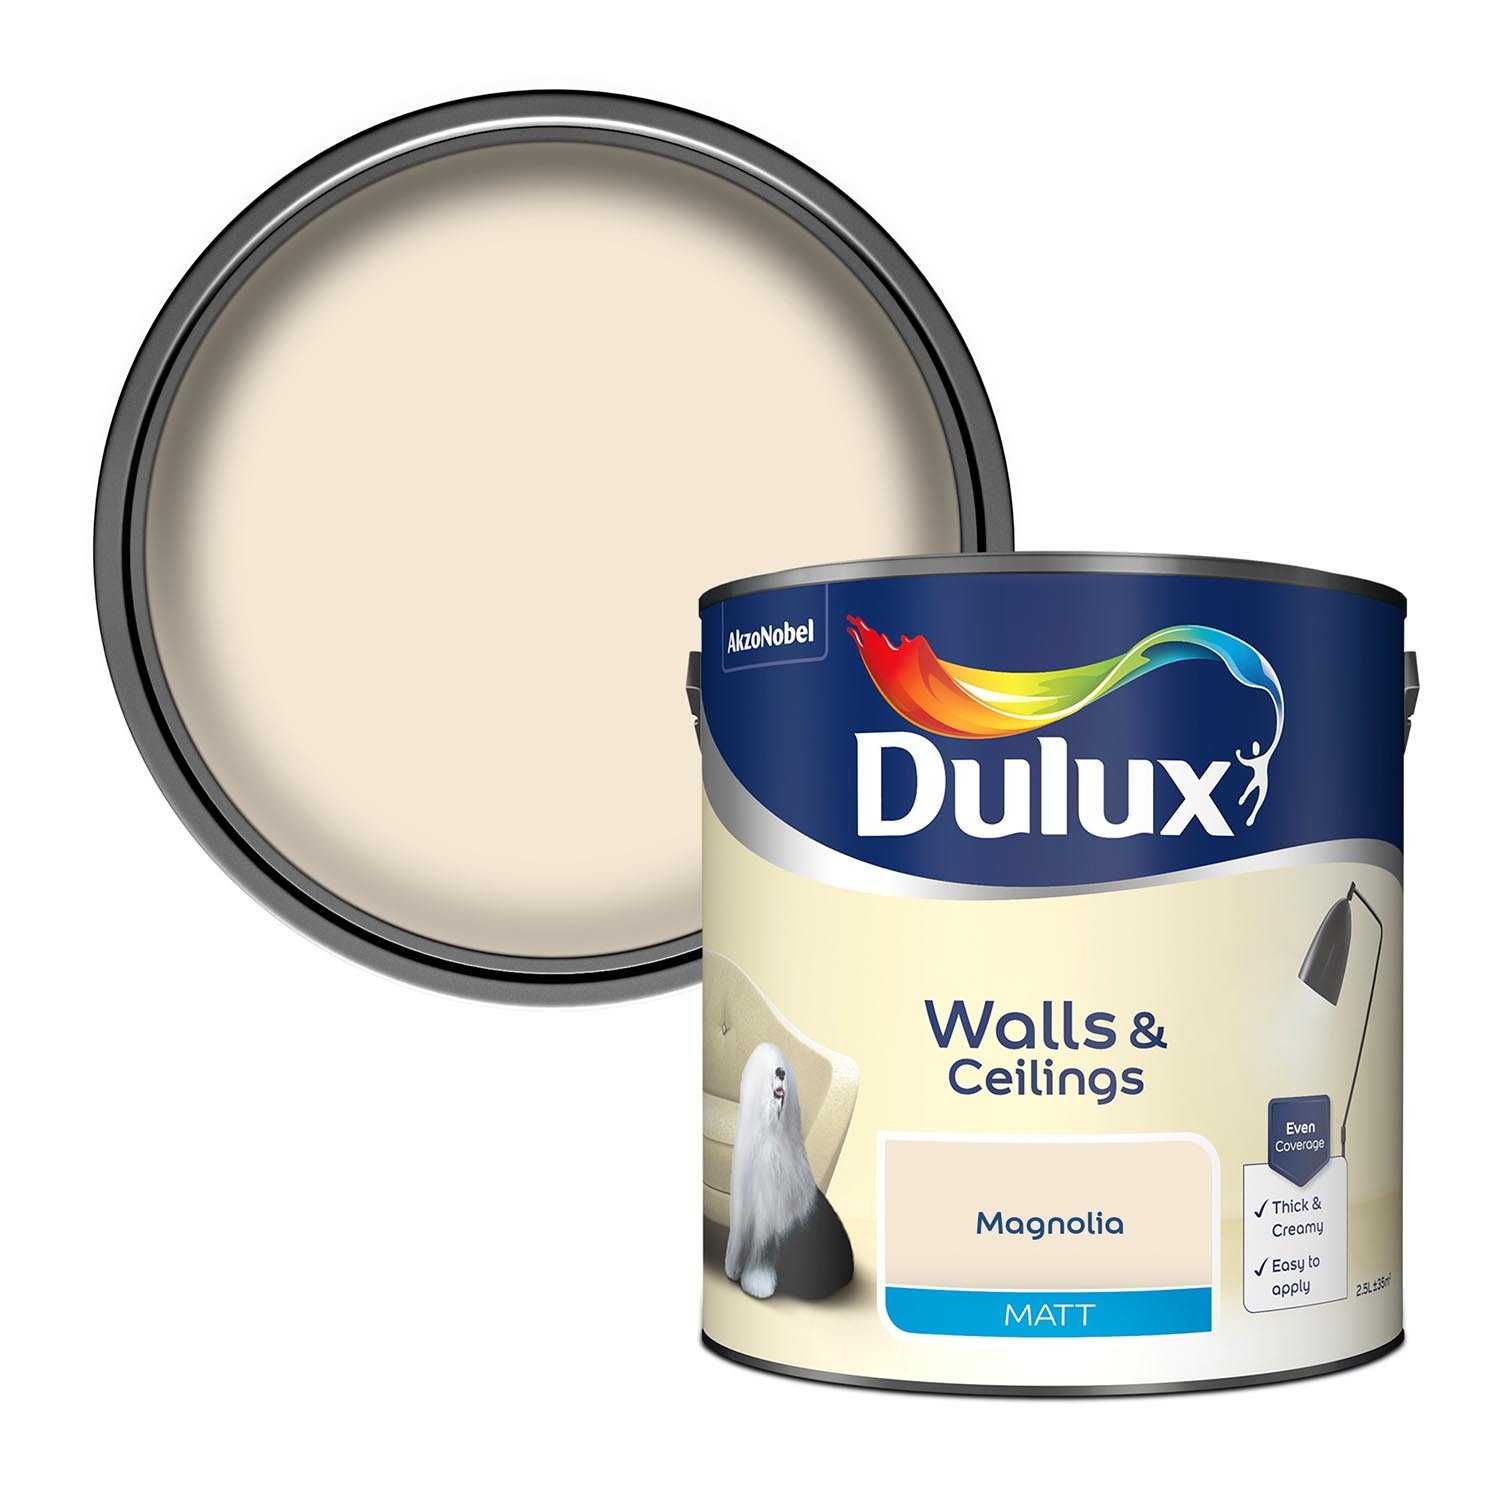 Dulux Walls and Ceilings Magnolia Matt Emulsion Paint 2.5L Image 1